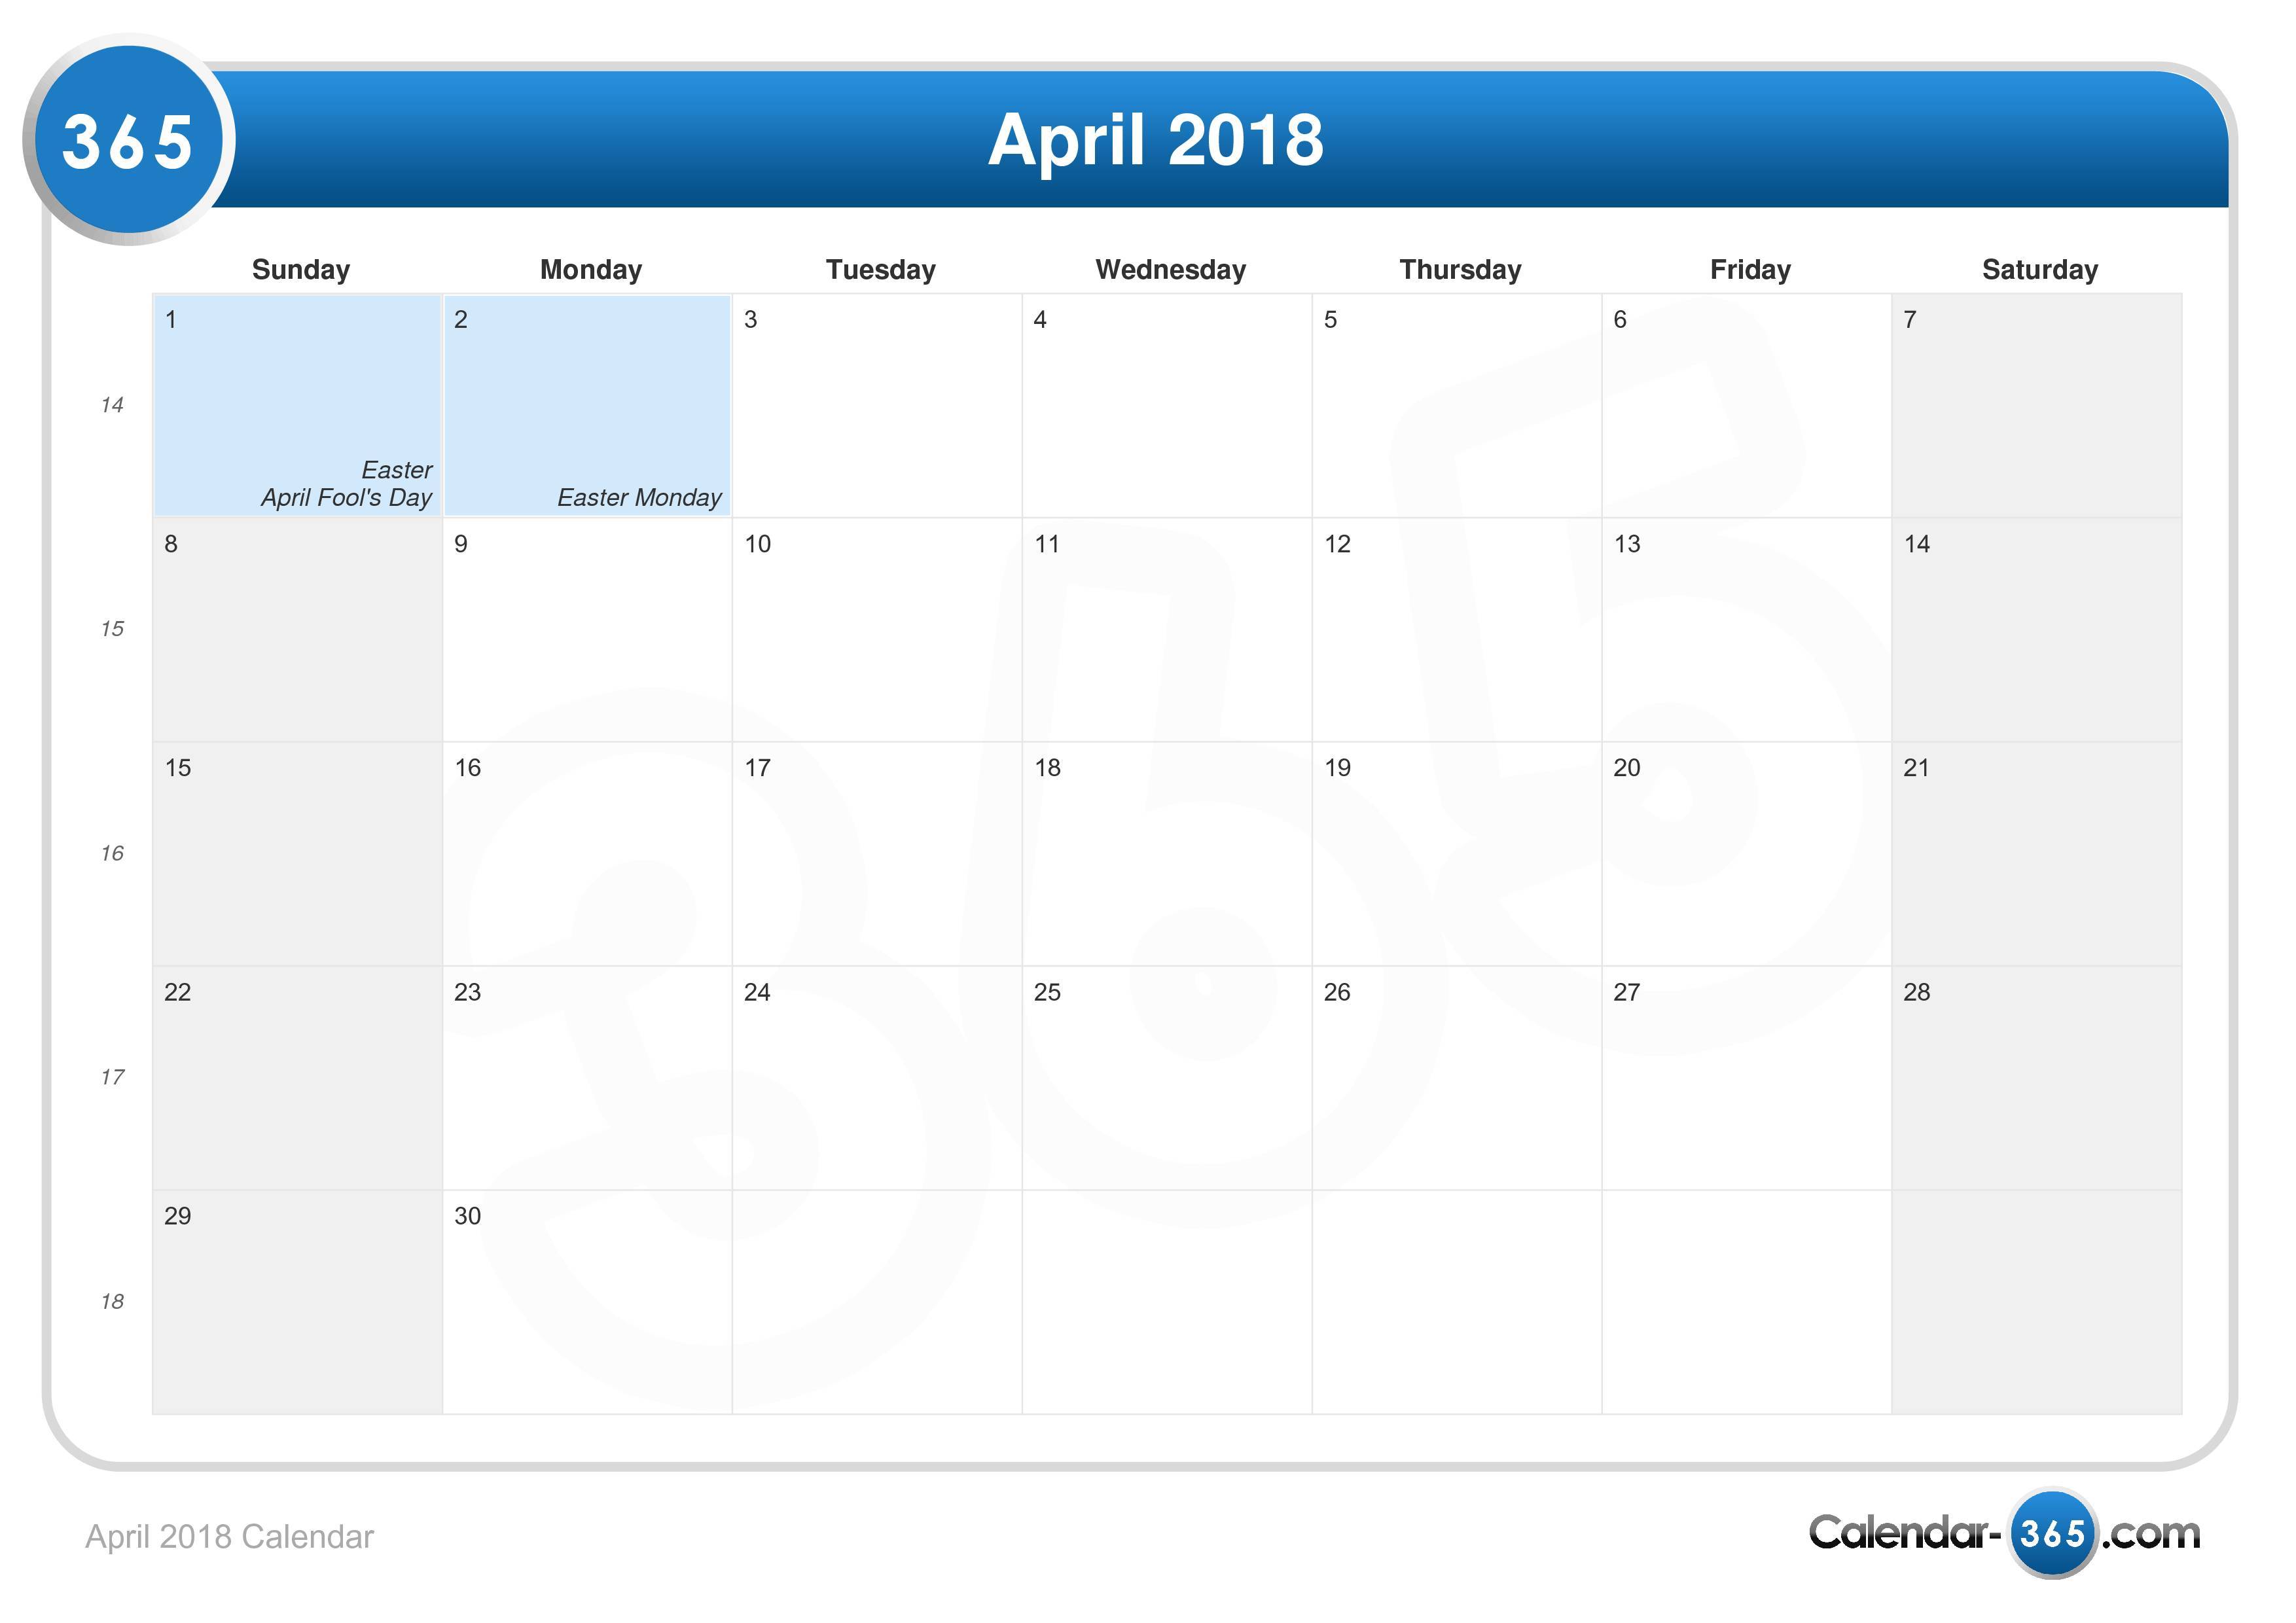 april-2018-calendar